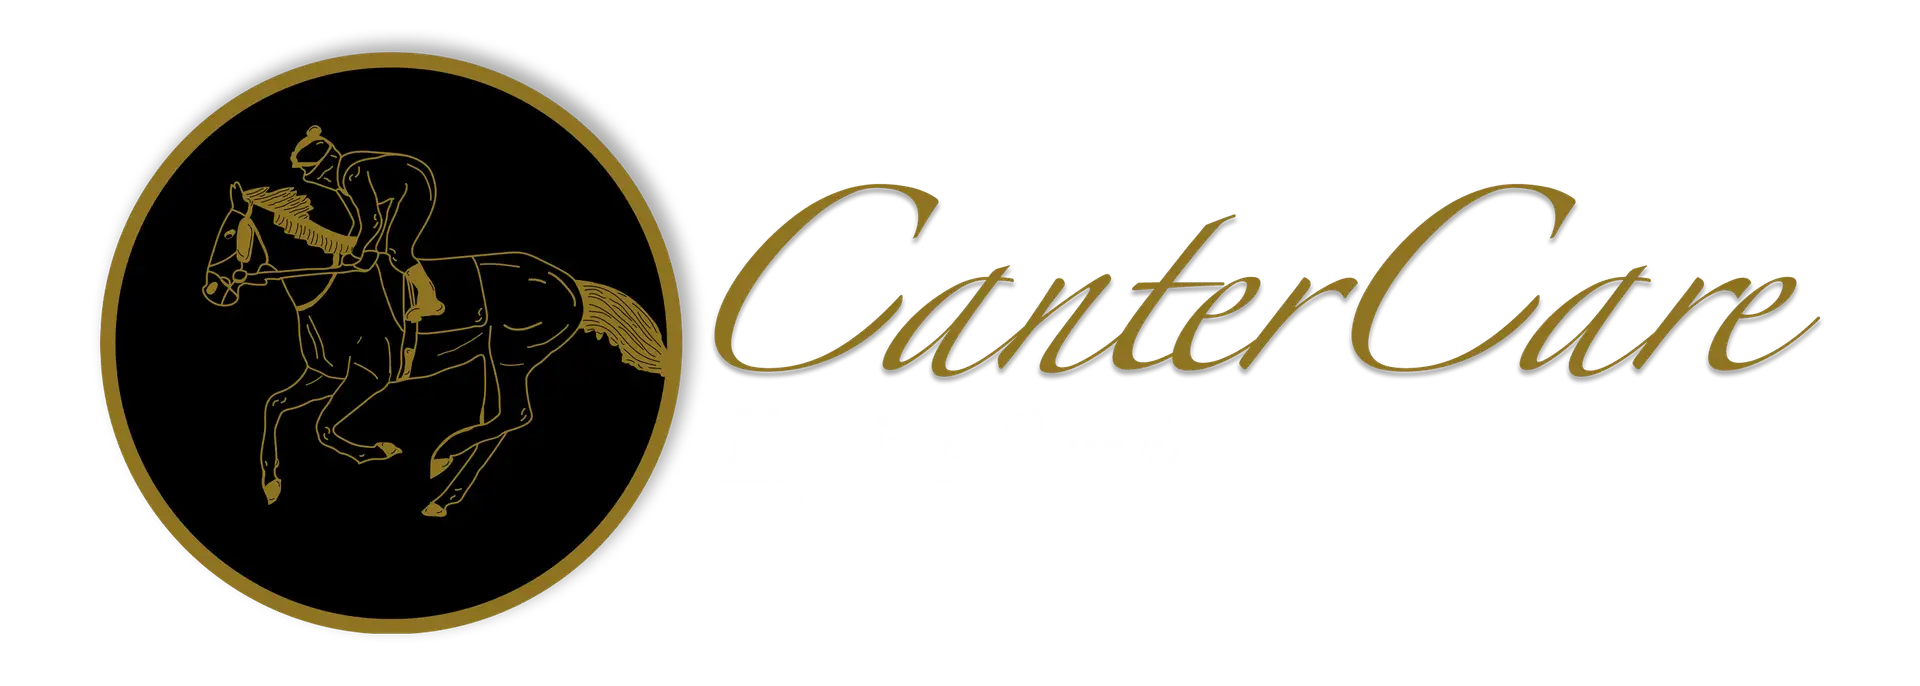 CanterCare Equine Service Logo